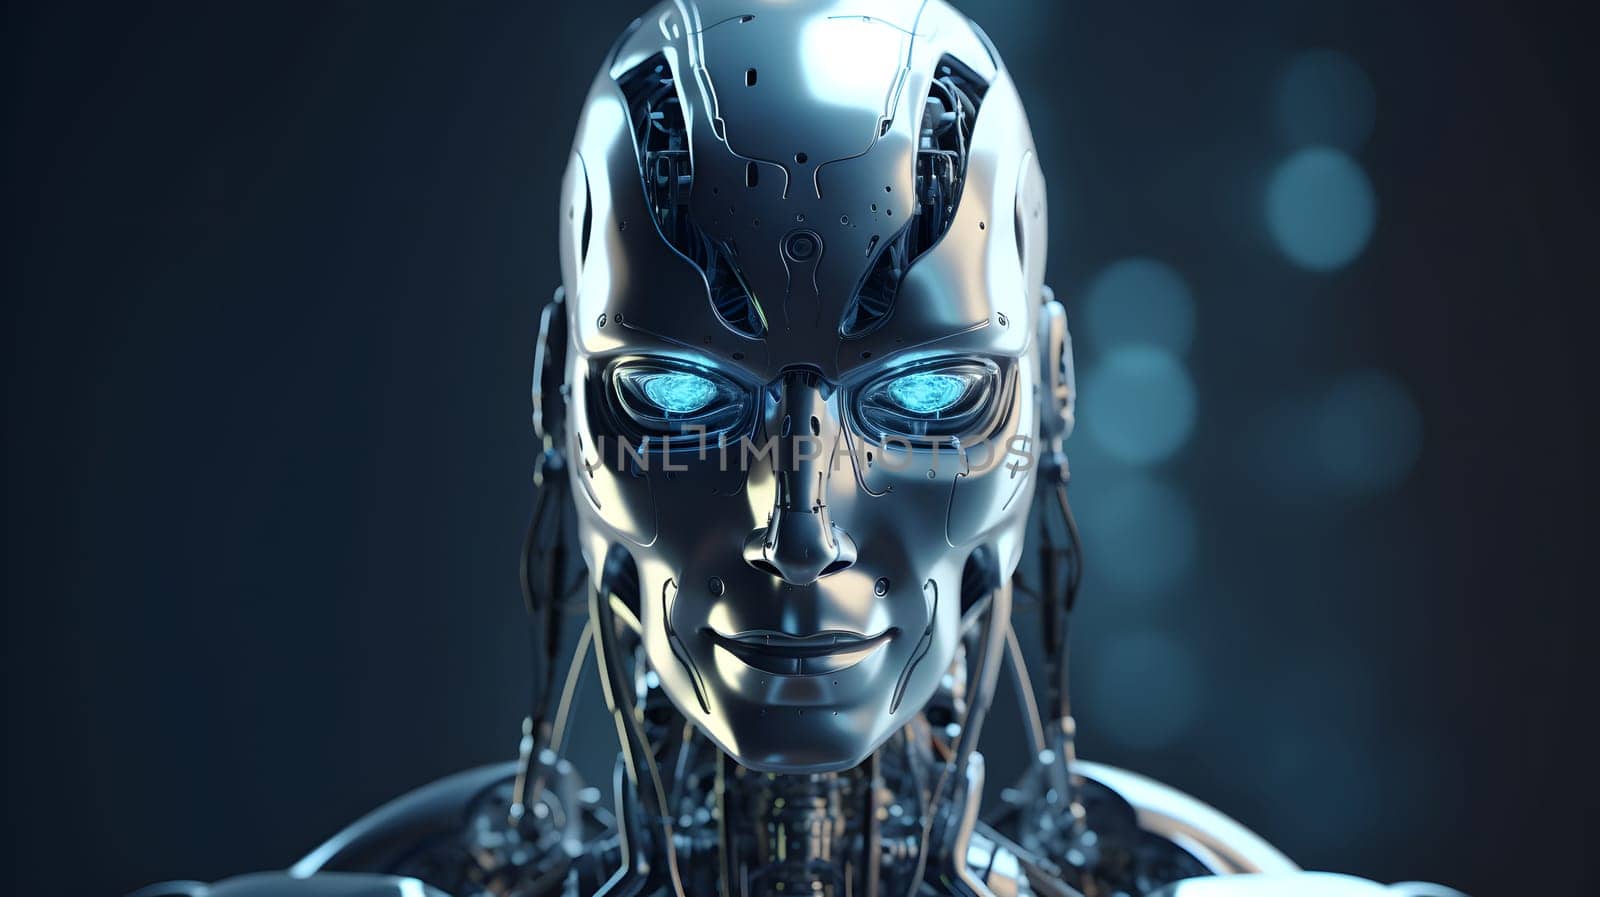 anthropomorphic humanoid robot head portrait on dark background in blue tones, neural network generated art by z1b